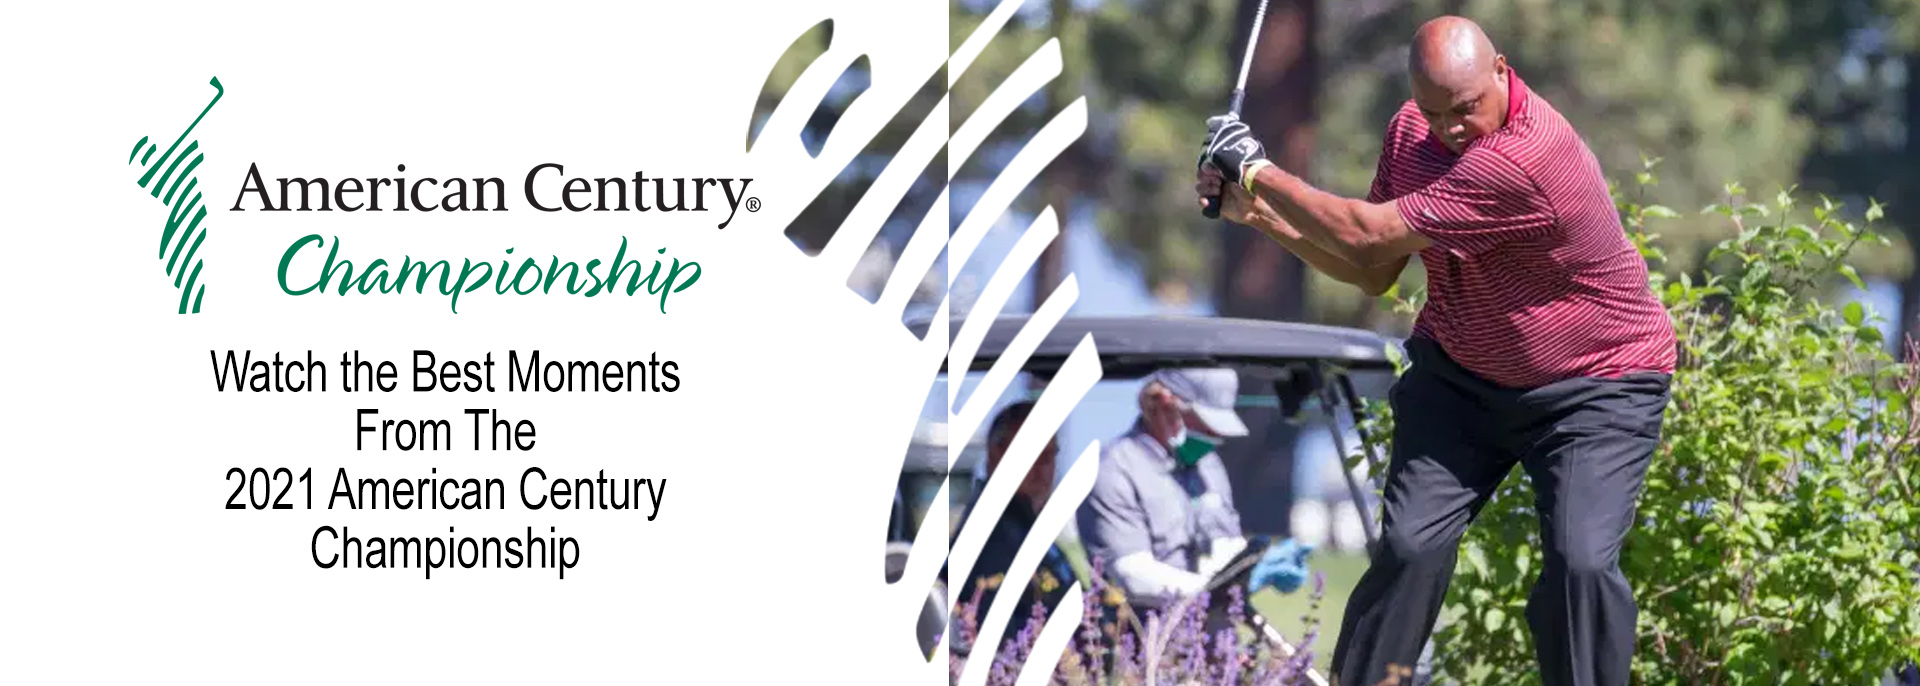 American Century Celebrity Golf Championship Tournament